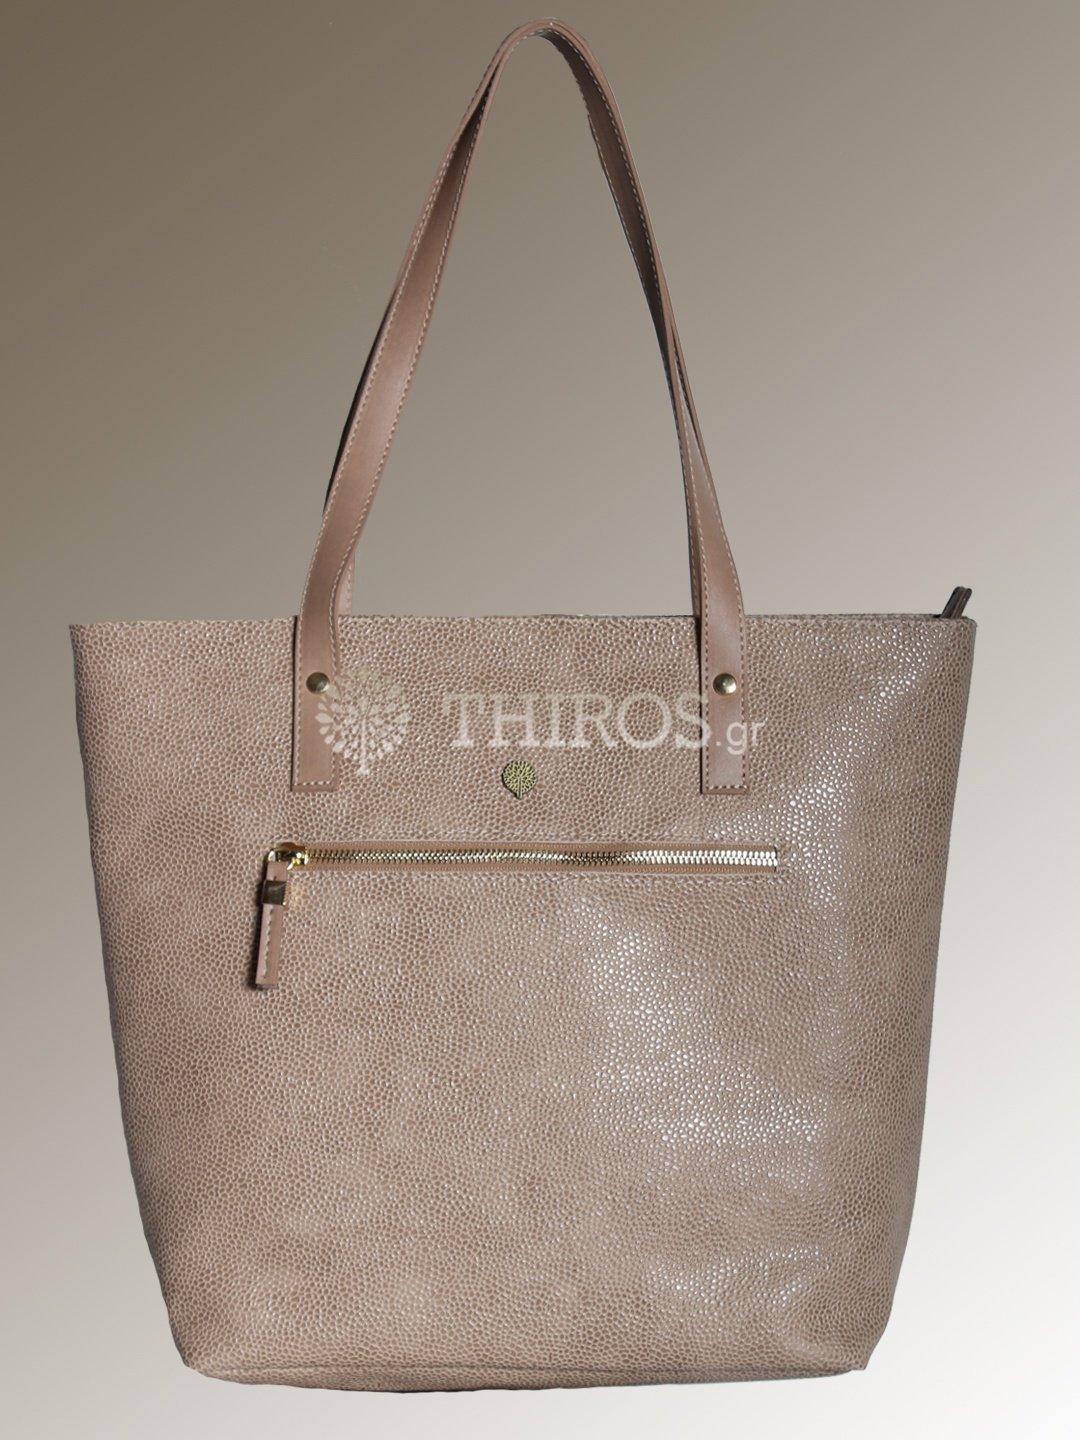 Thirosbags on X: "Διάφορα σχέδια #bags σε χρώμα #Carne Οnline κατάστημα # thiros &gt;&gt; https://t.co/XBRozIT7TS #thiros #crossbody #backpacks  #totebags #madeinGR https://t.co/6HaSIu2FL6" / X